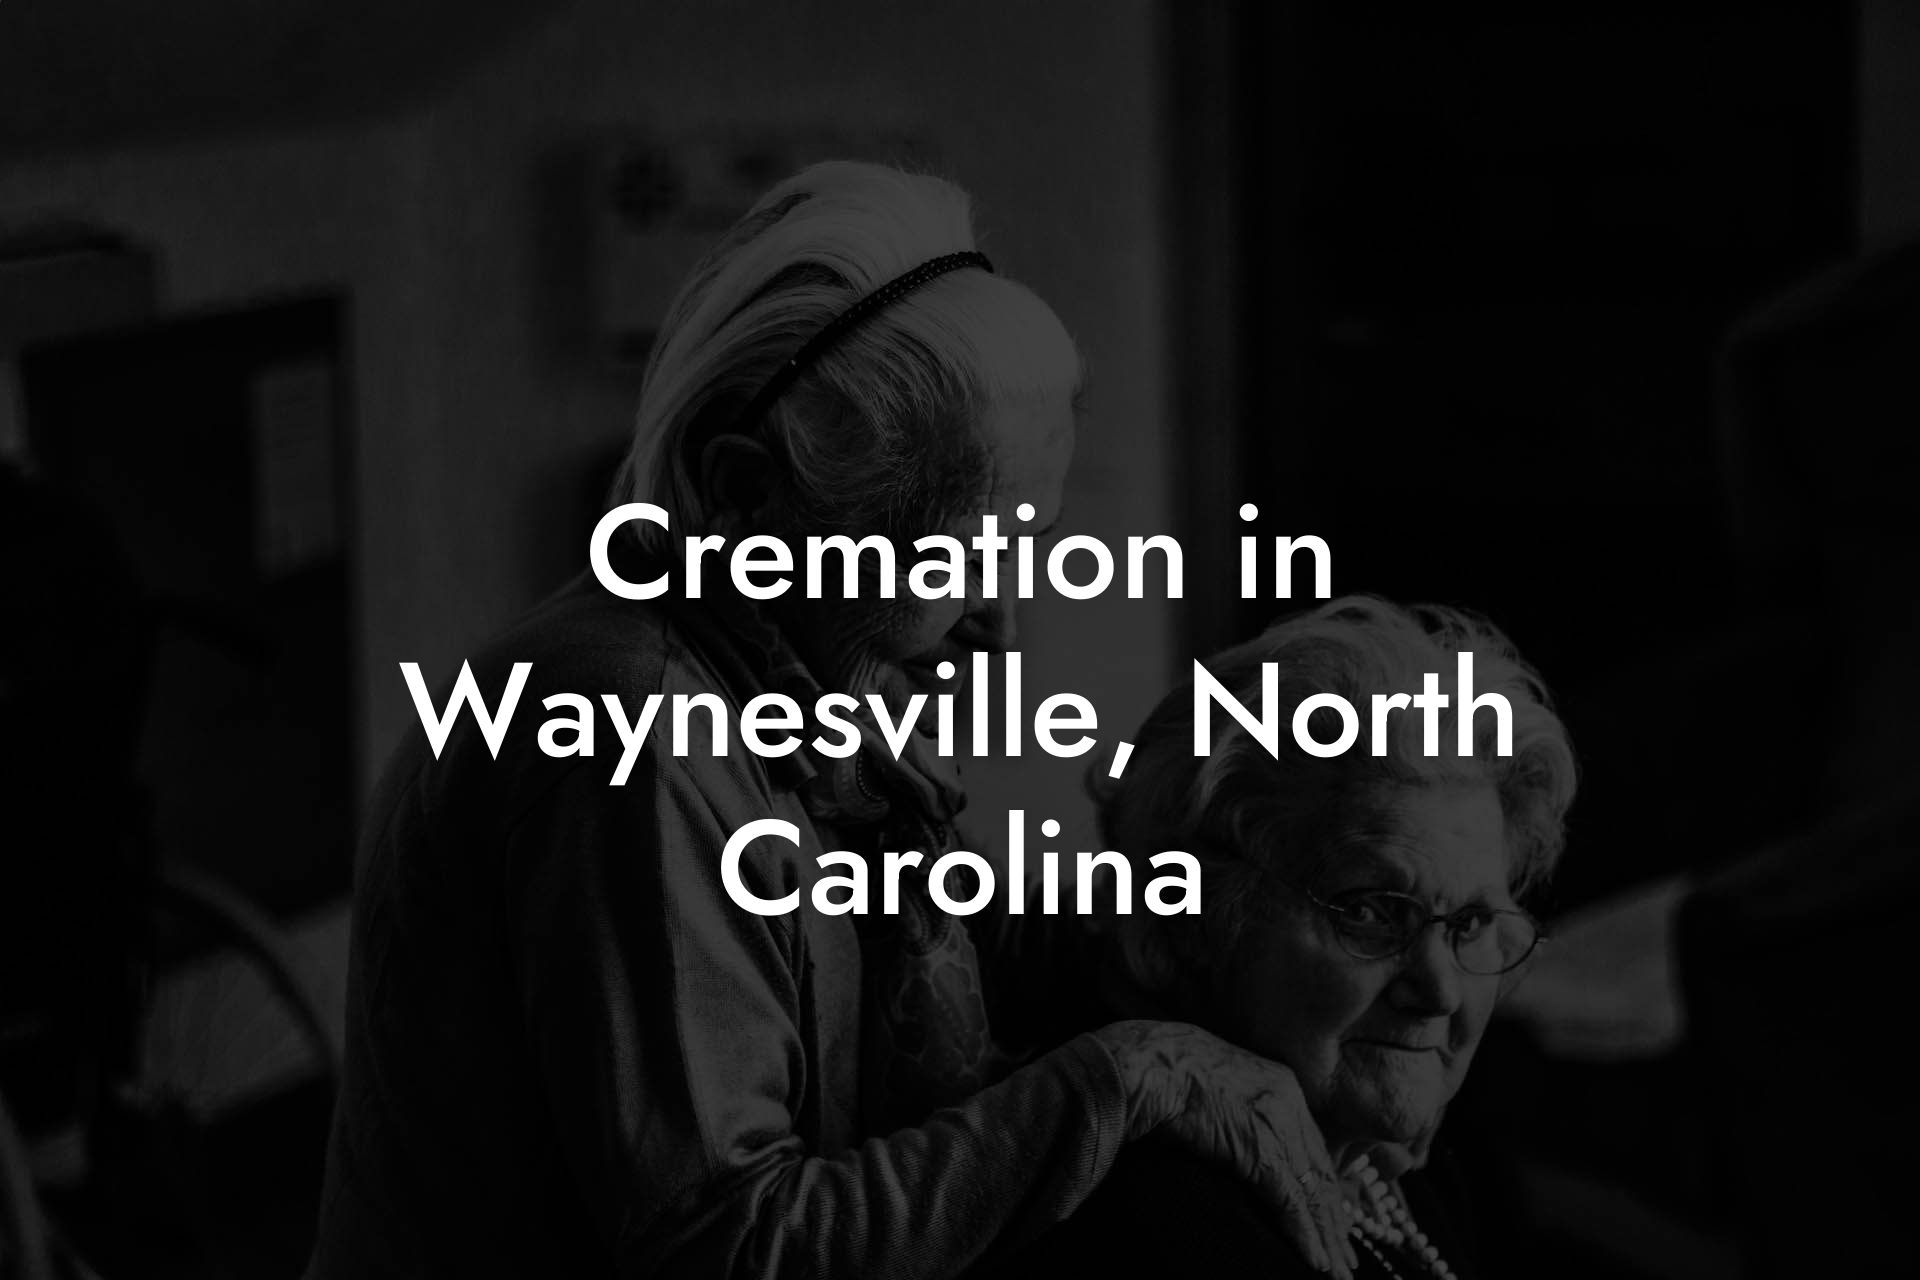 Cremation in Waynesville, North Carolina